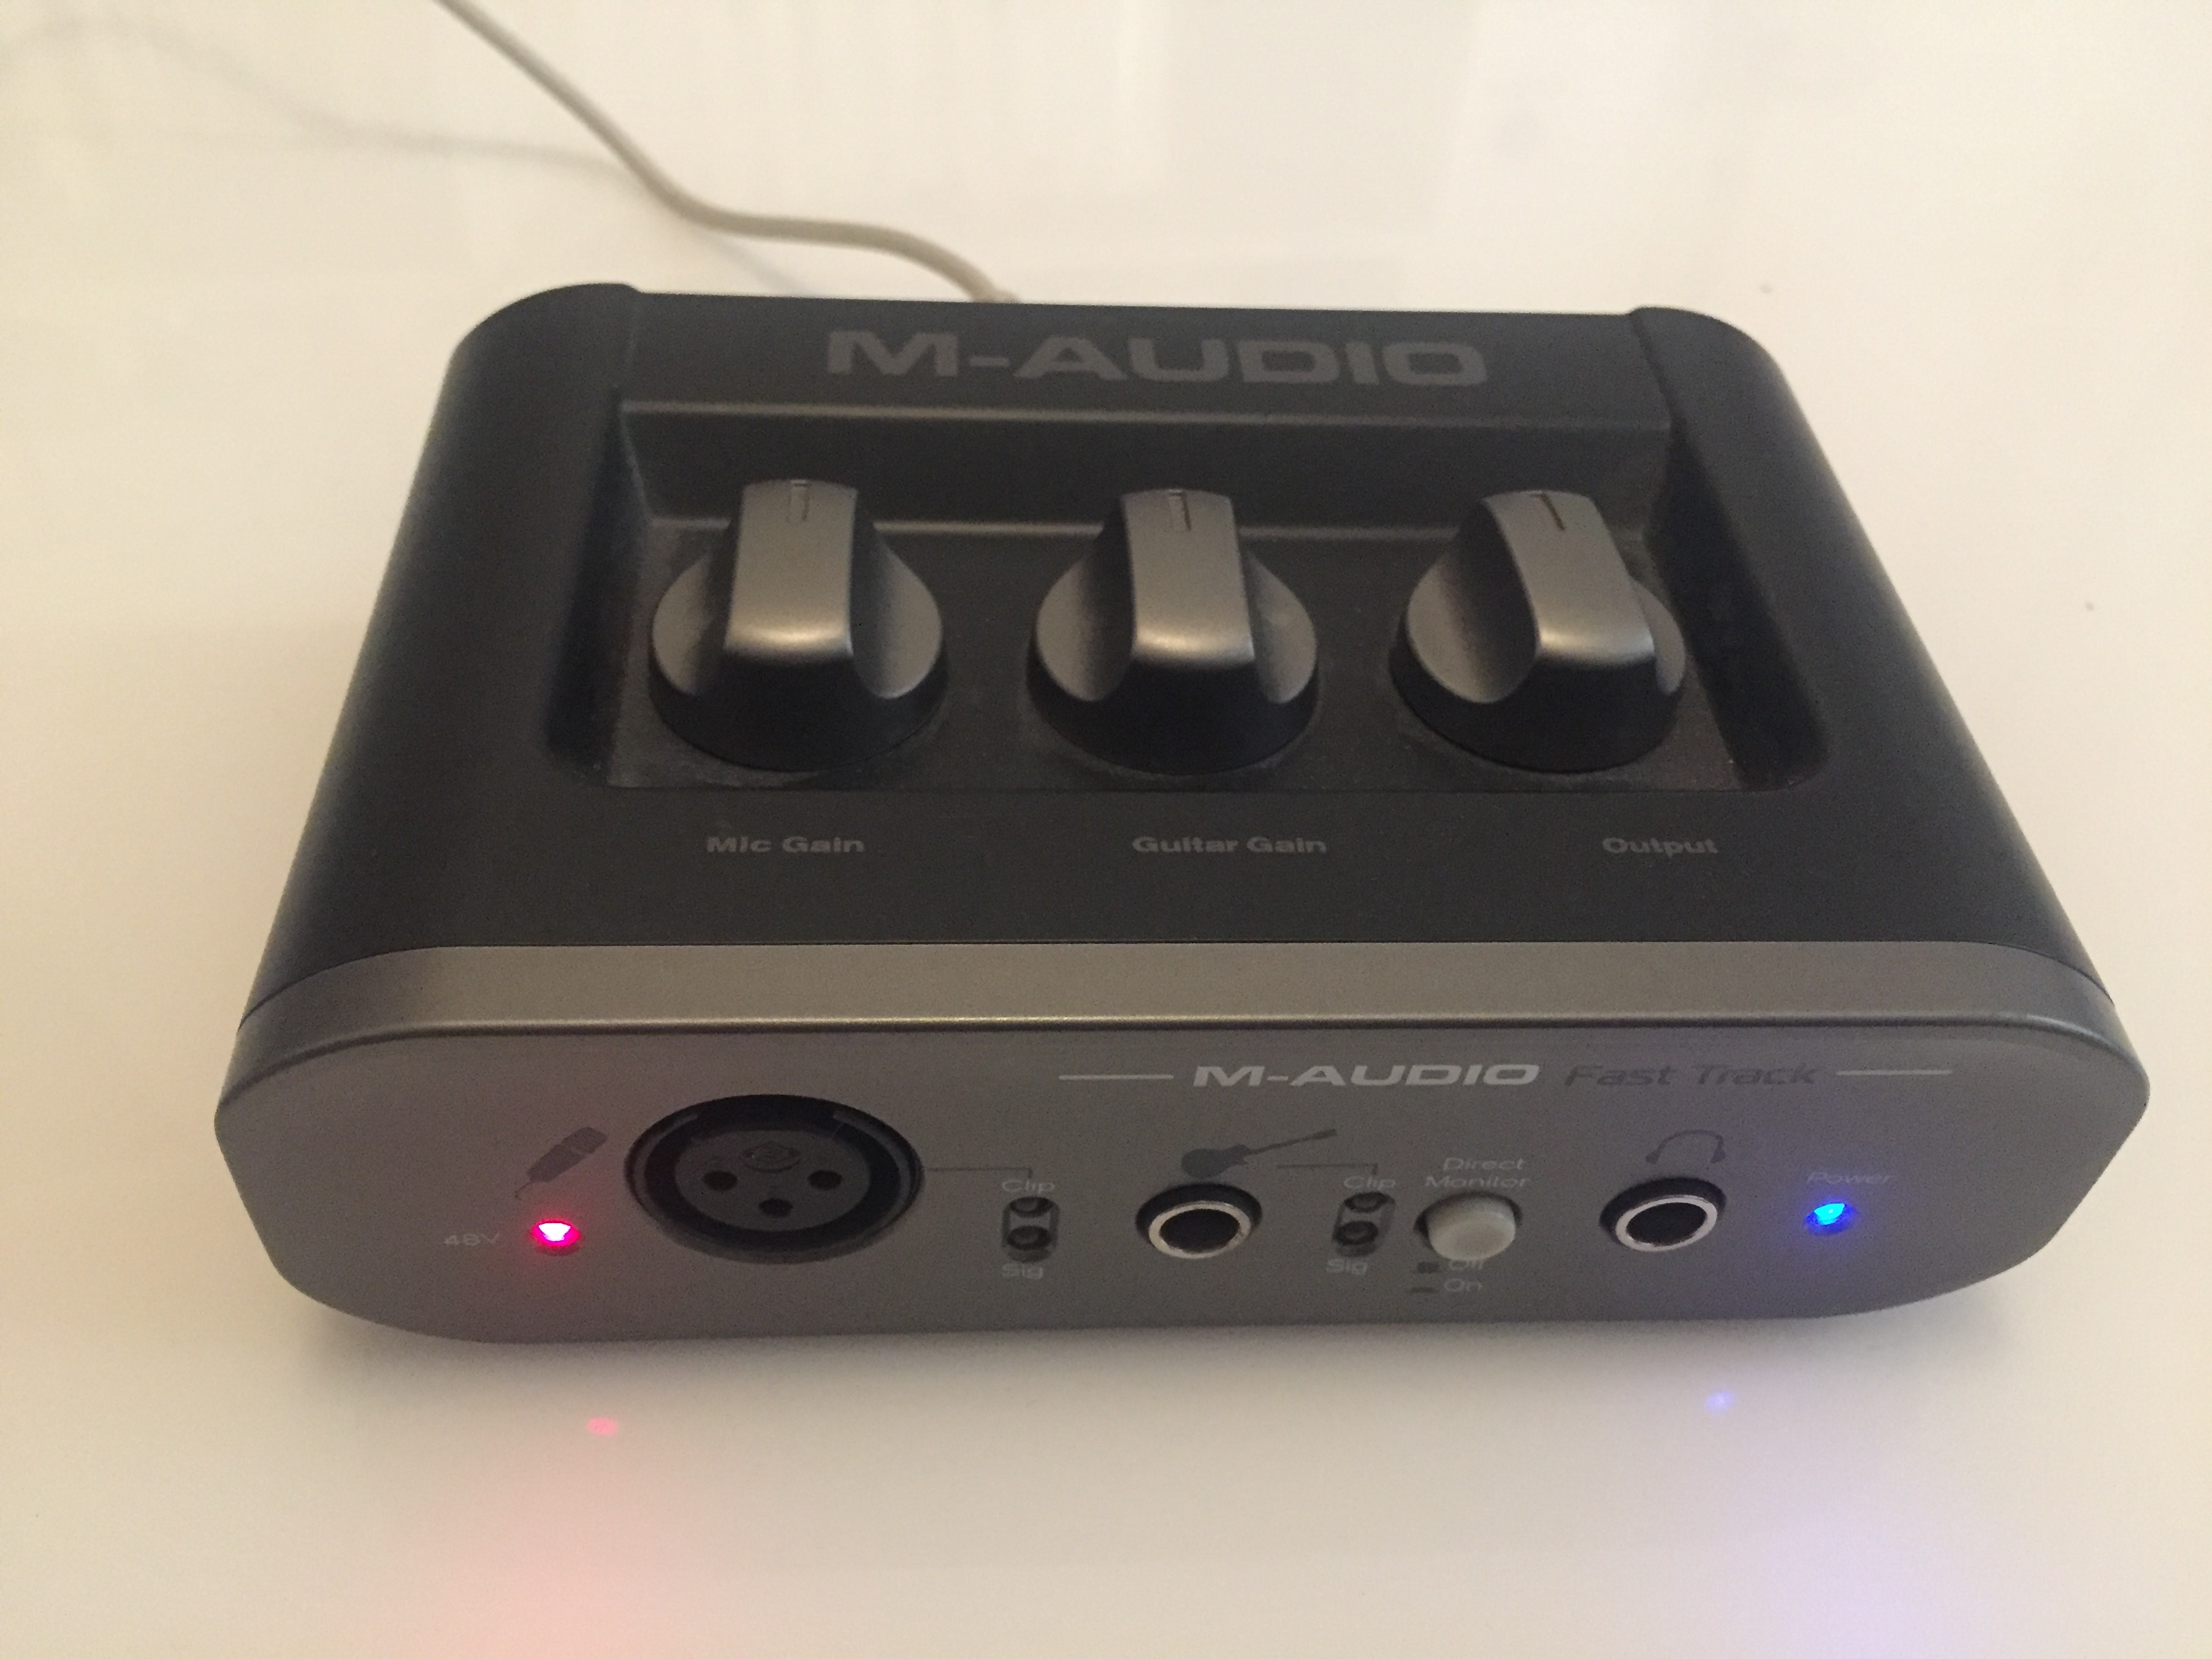 m audio fast track ultra mac